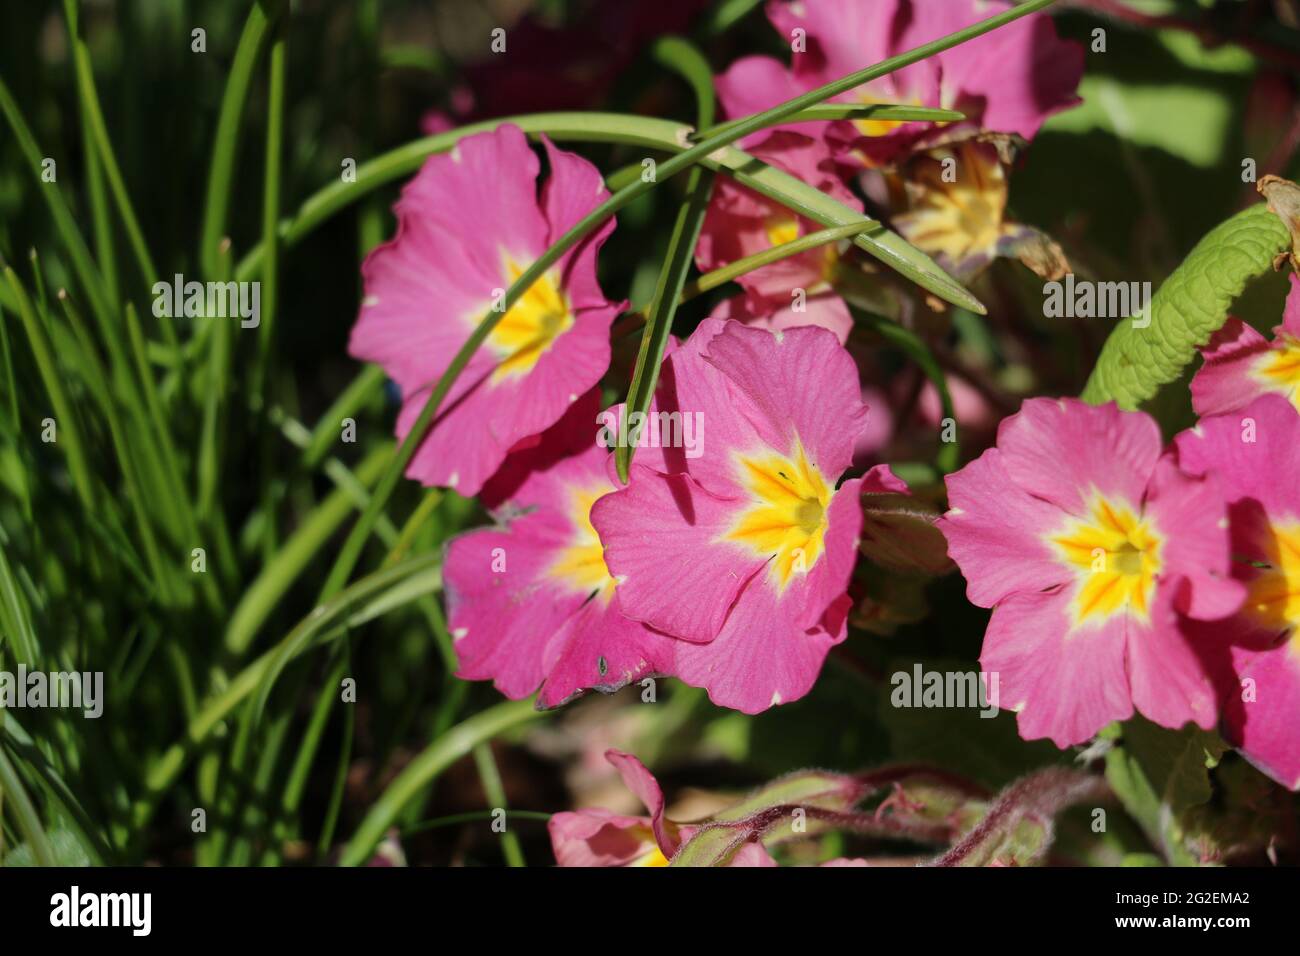 Pretty pink Primrose flowers, Primula vulgaris sibthorpii, blooming in springtime, close-up view Stock Photo